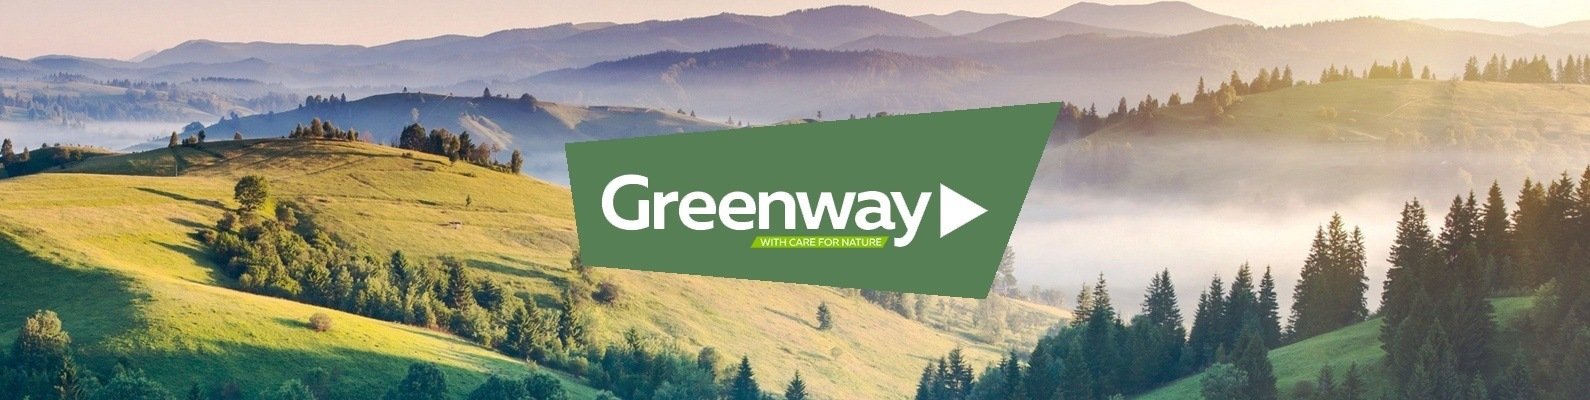 Greenway баннер